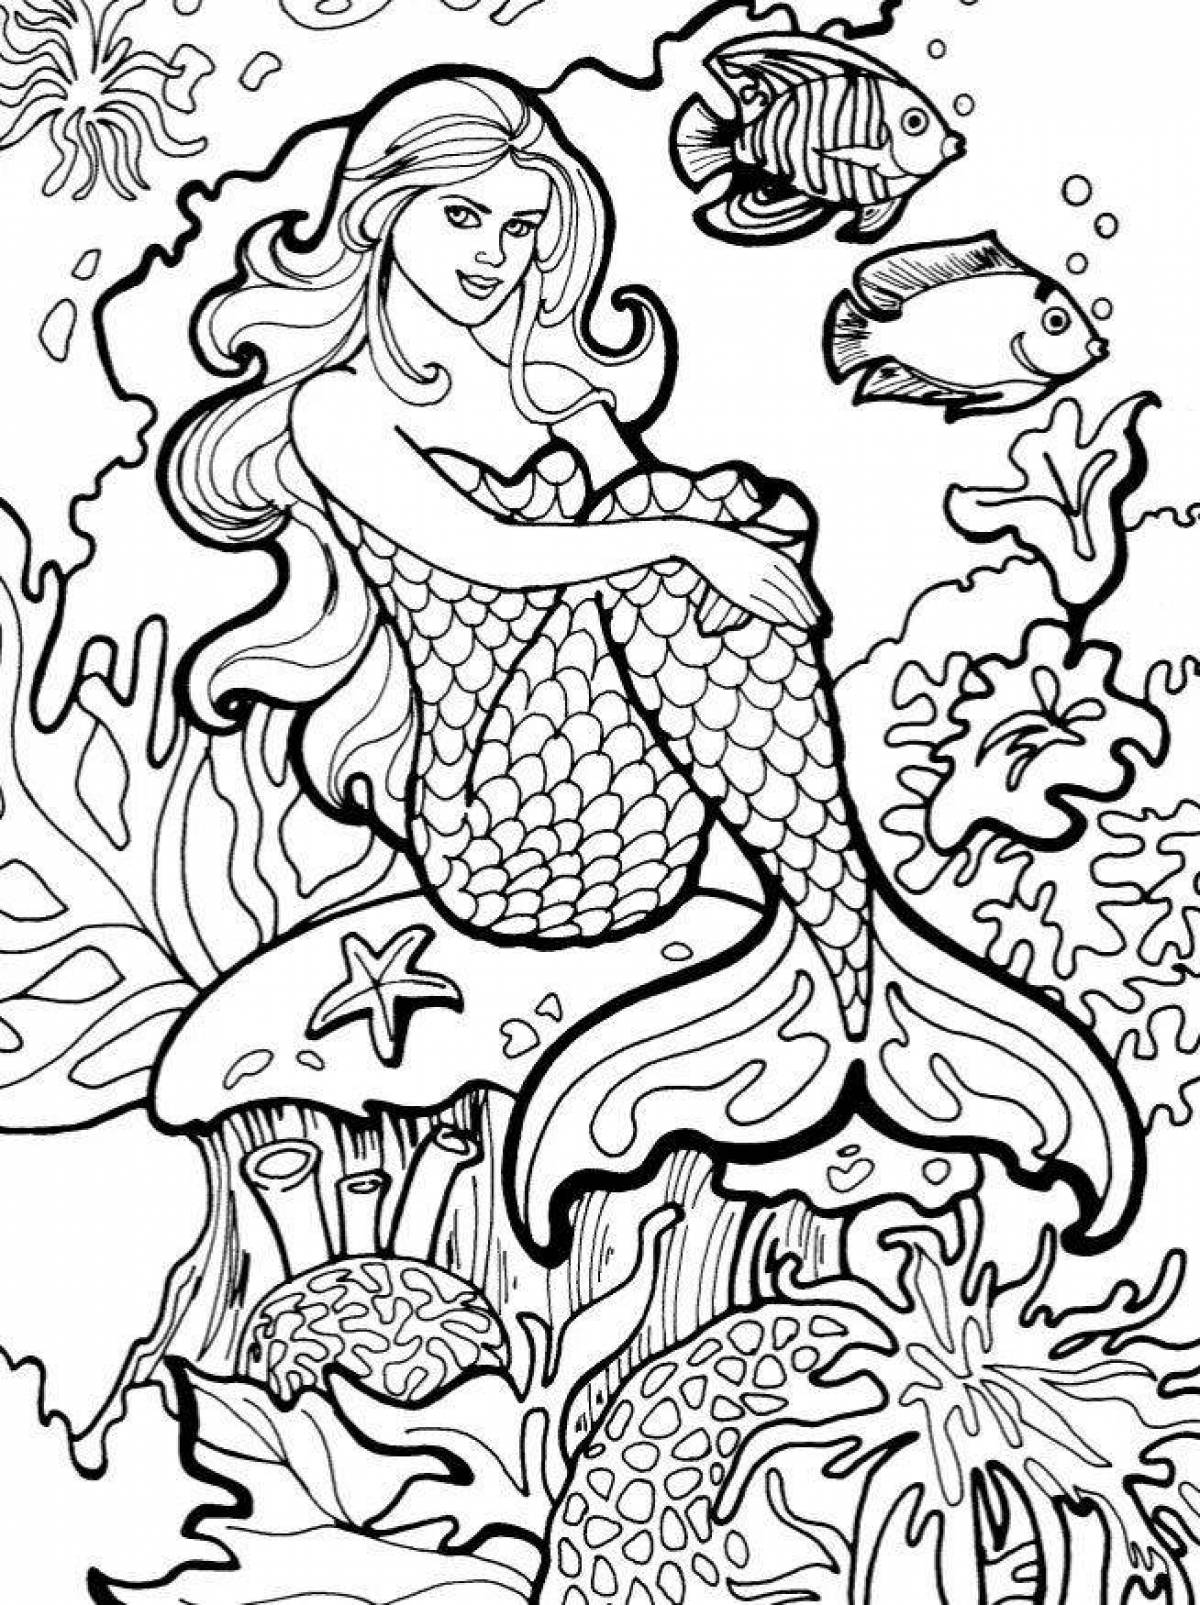 Hypnotic coloring book antistress mermaid